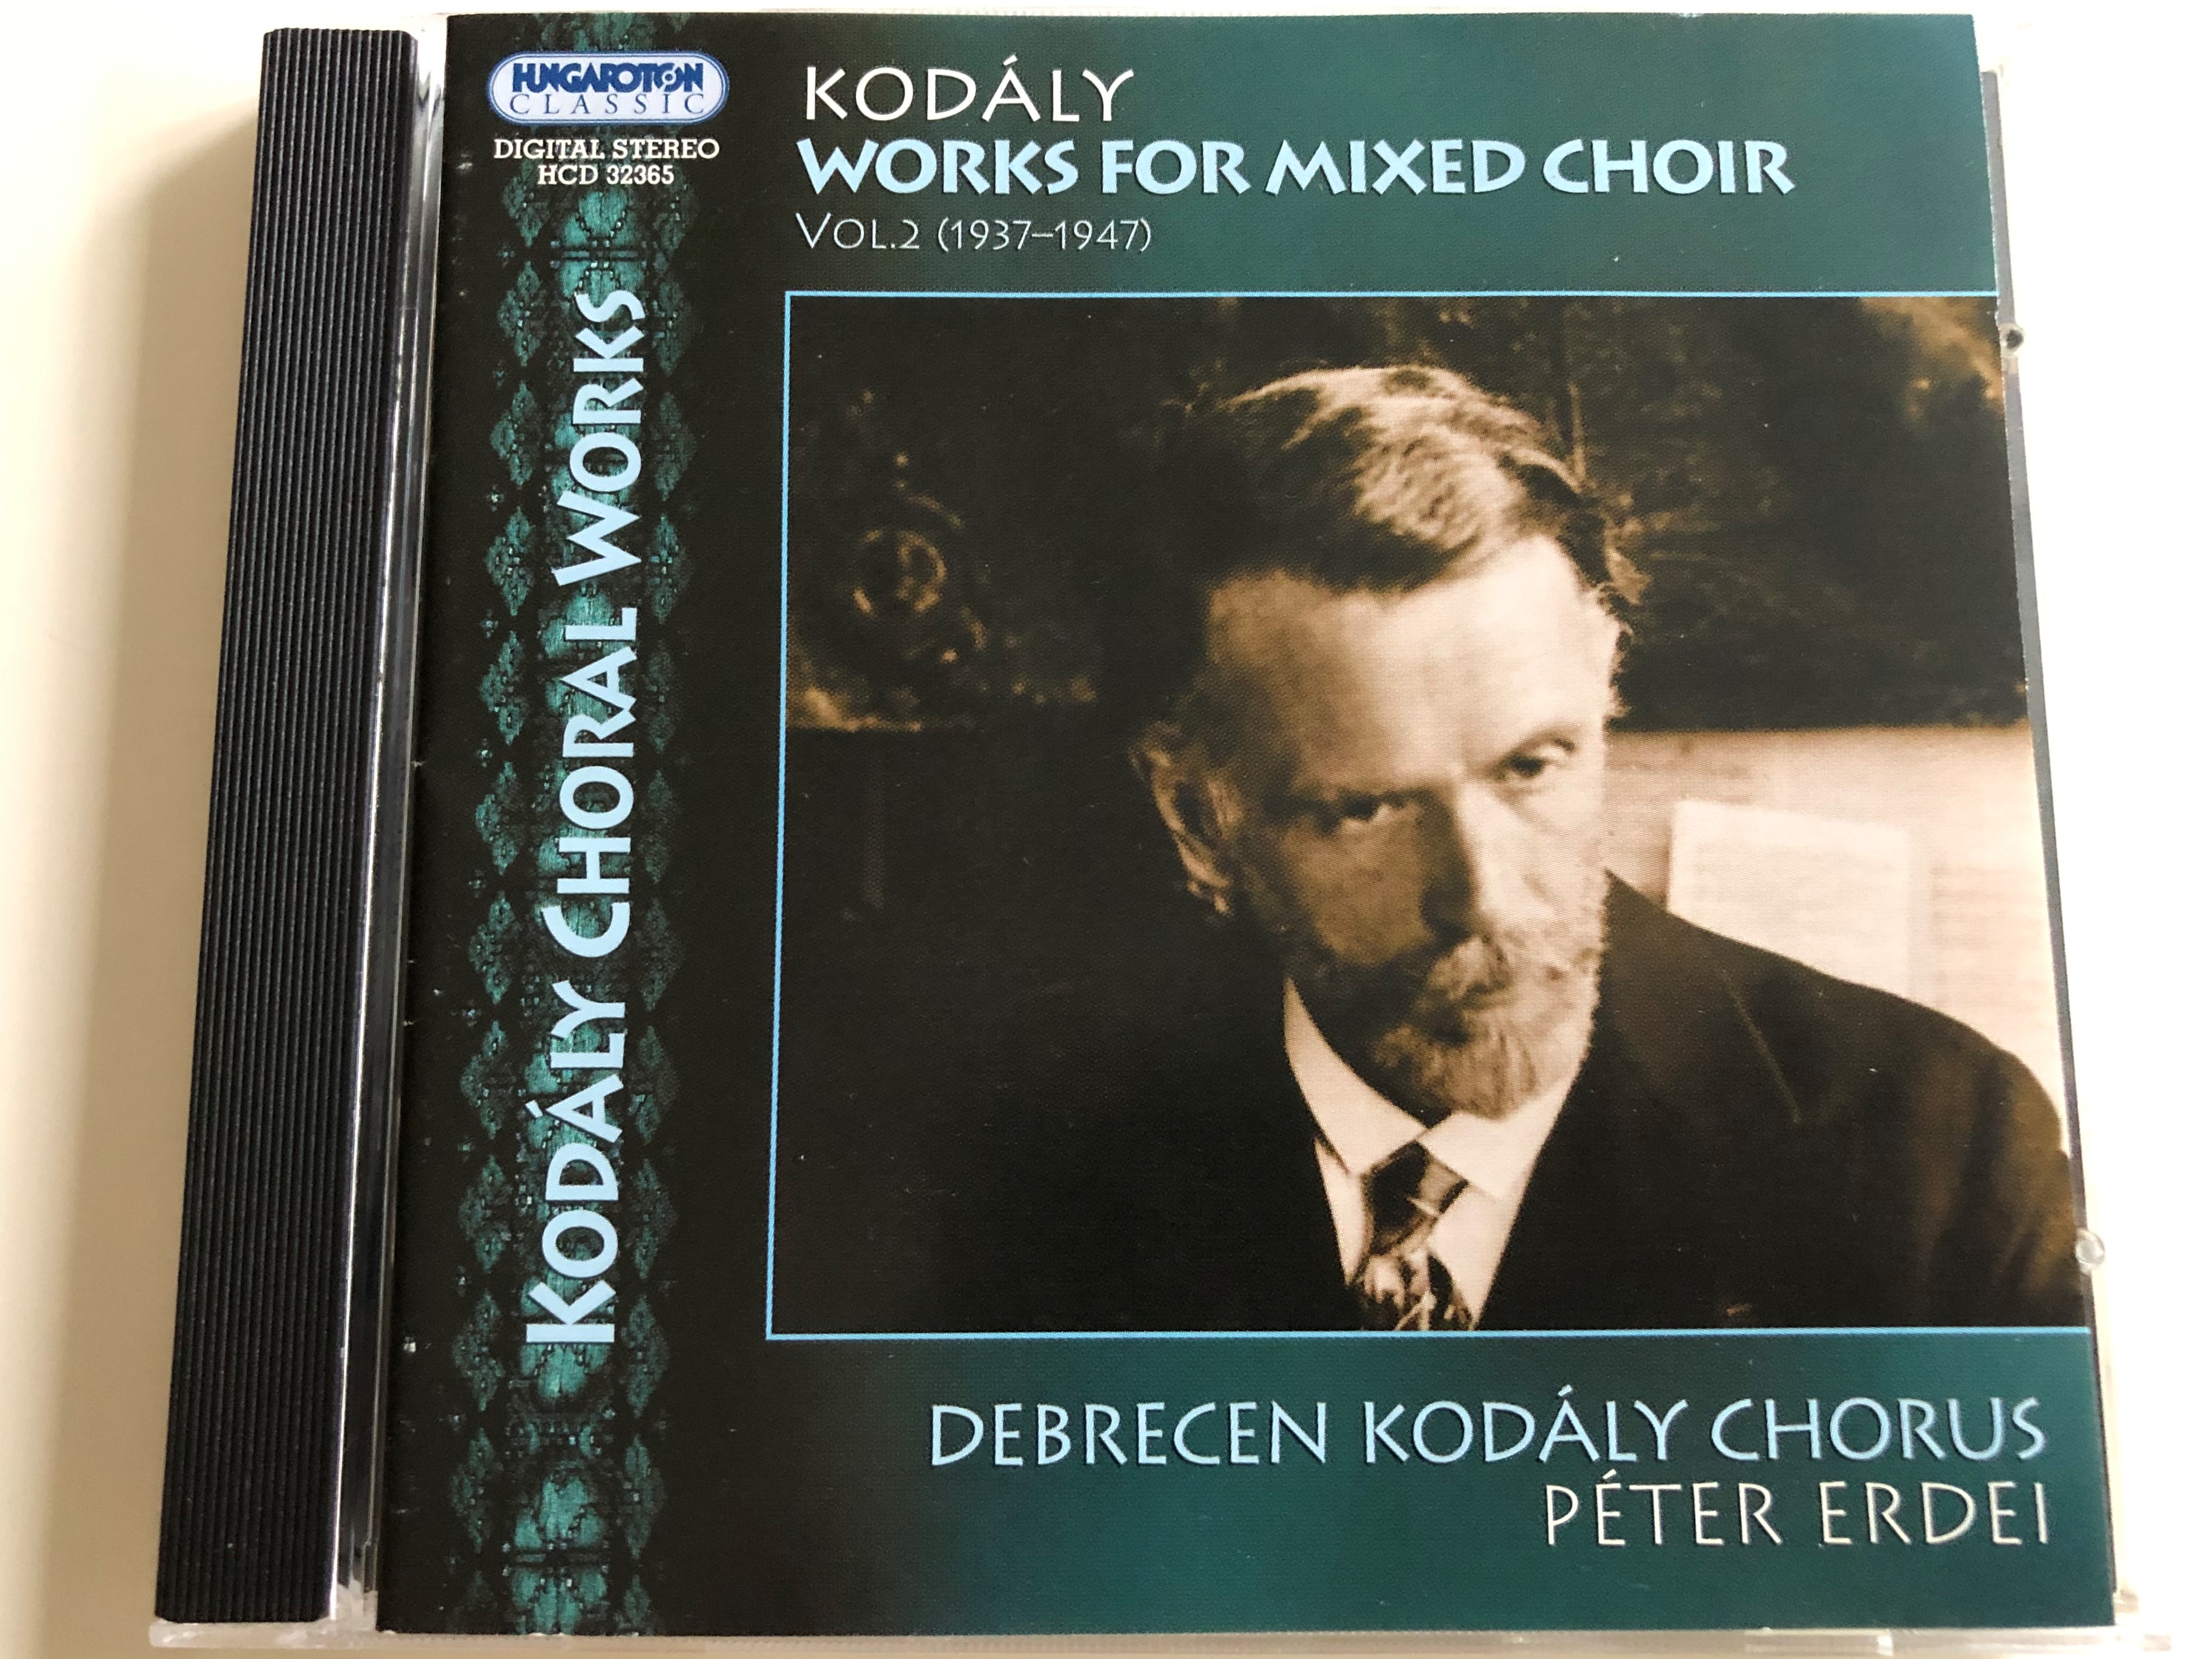 kod-ly-works-for-mixed-choir-vol.-2-1937-1947-debrecen-kod-ly-chorus-conducted-by-p-ter-erdei-audio-cd-2005-hcd32365-hungaroton-1-.jpg